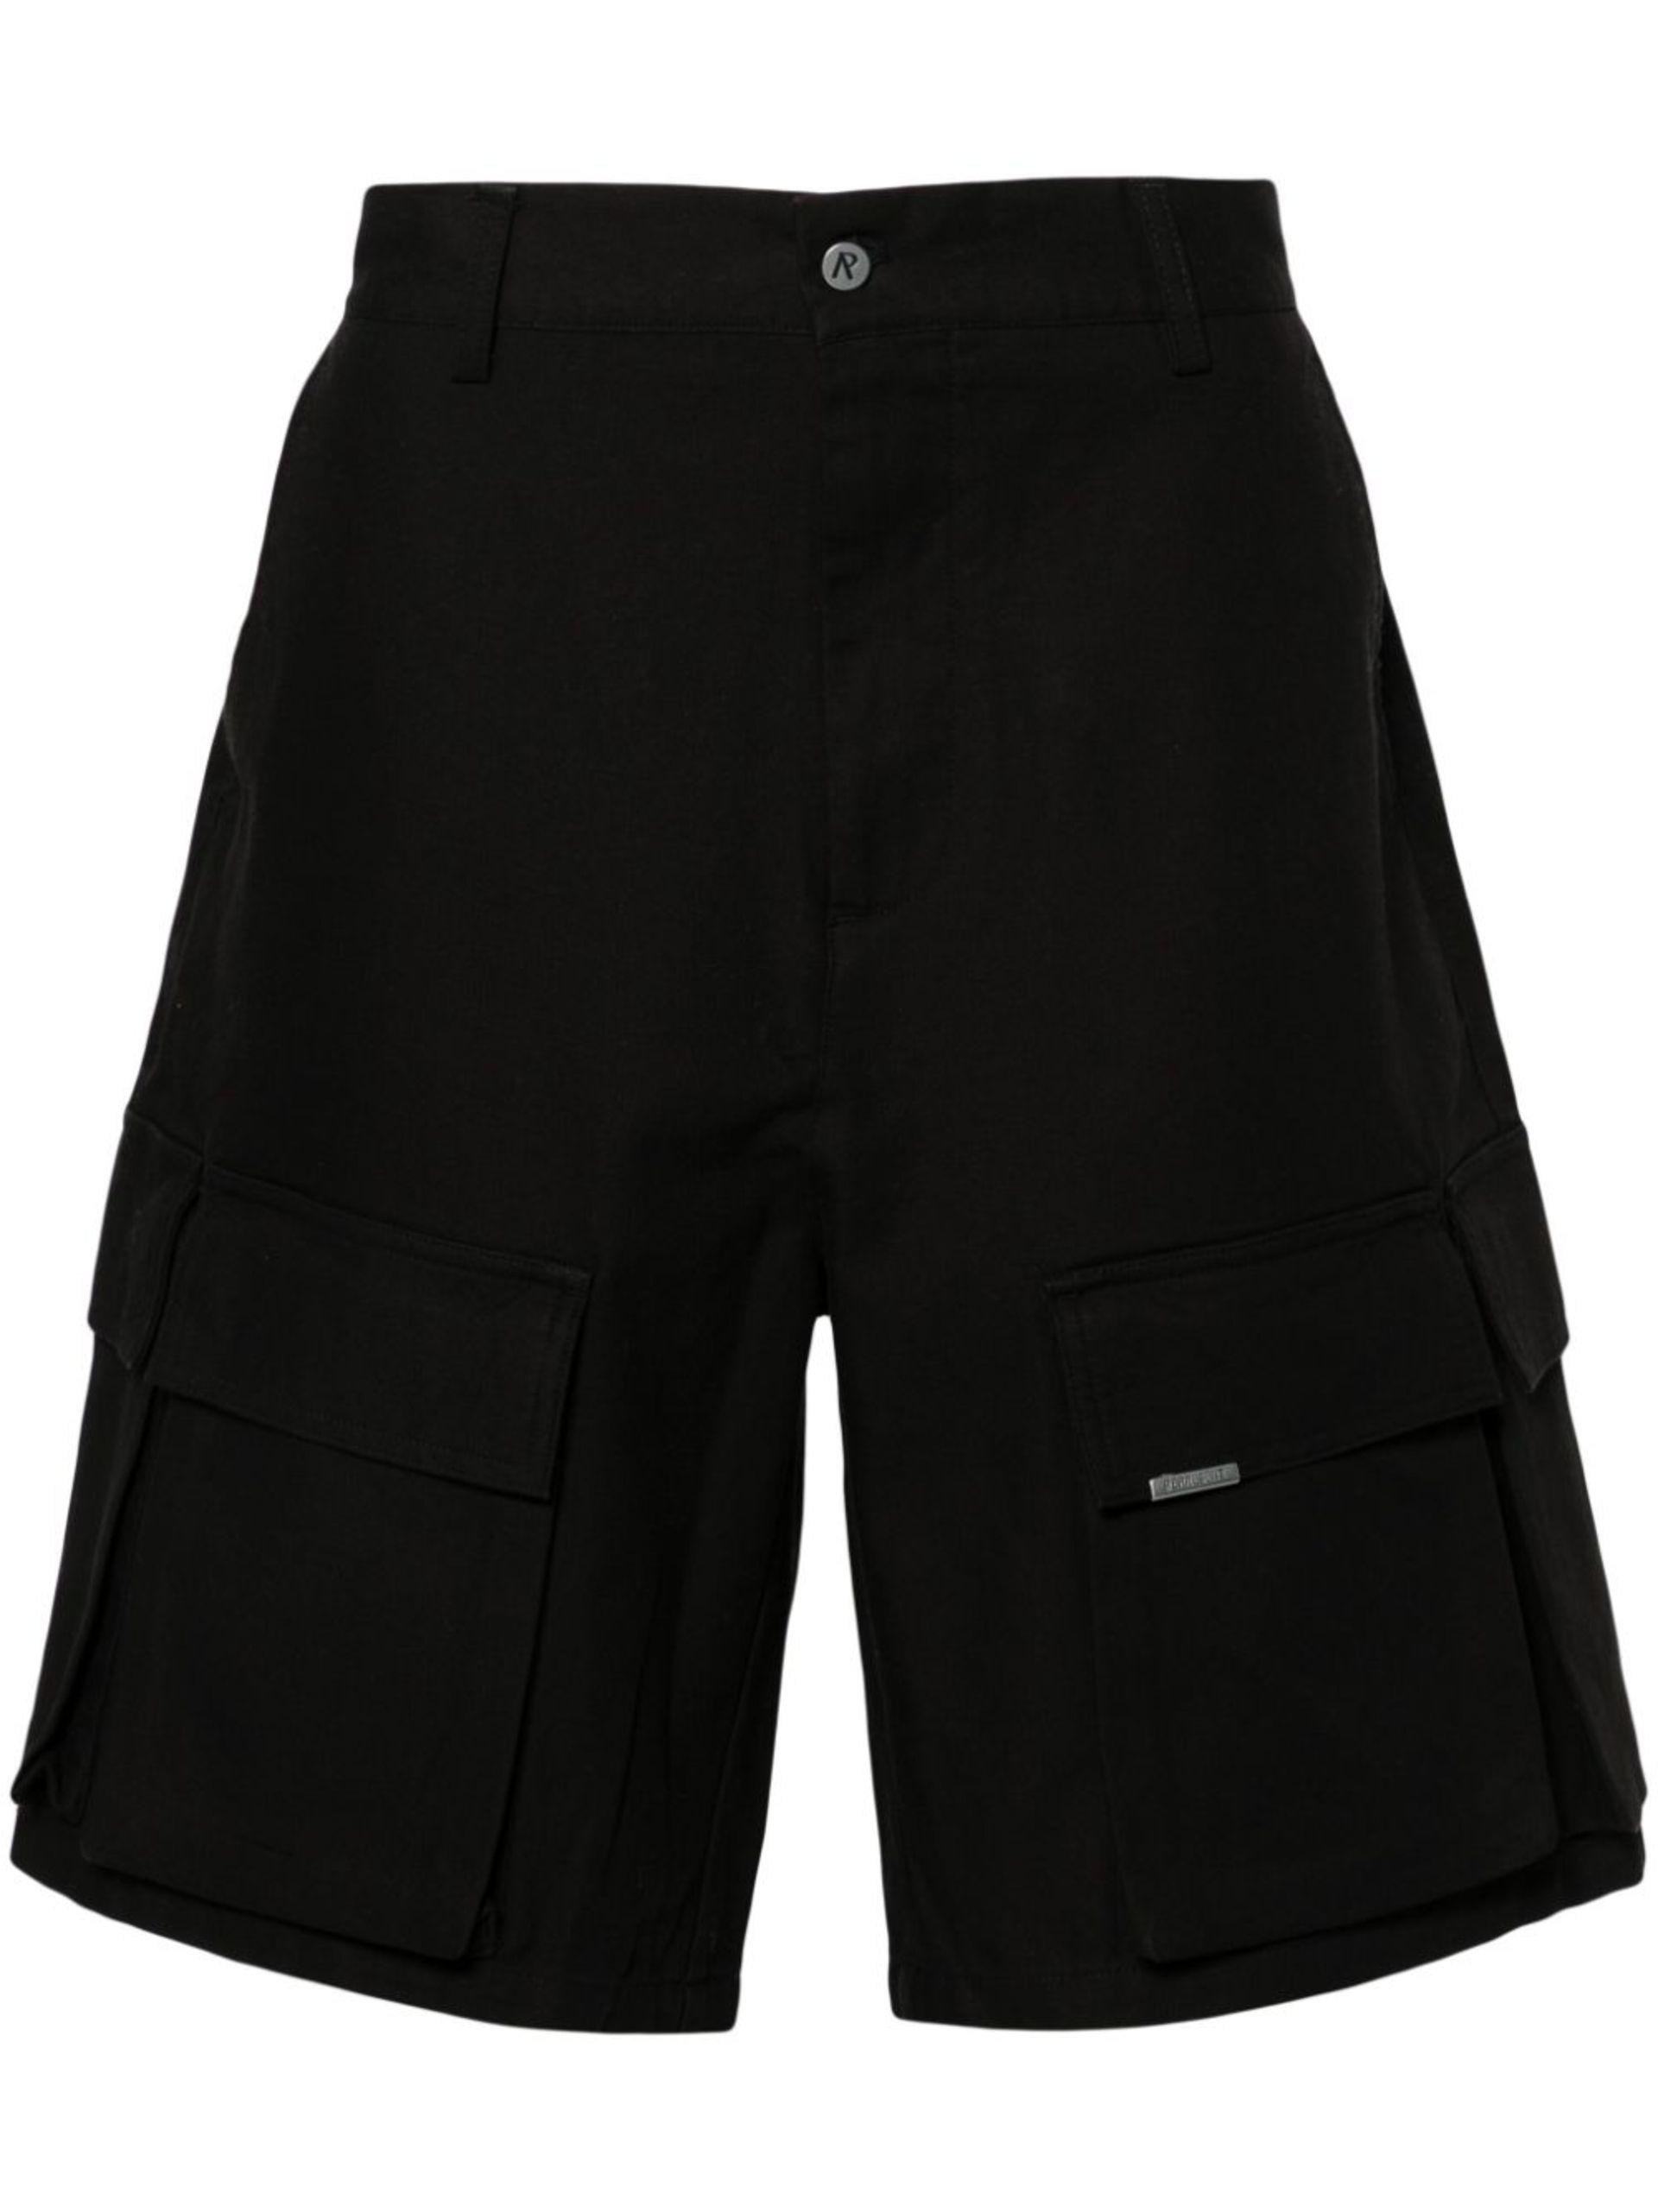 Represent Cotton Cargo Shorts in Black for Men